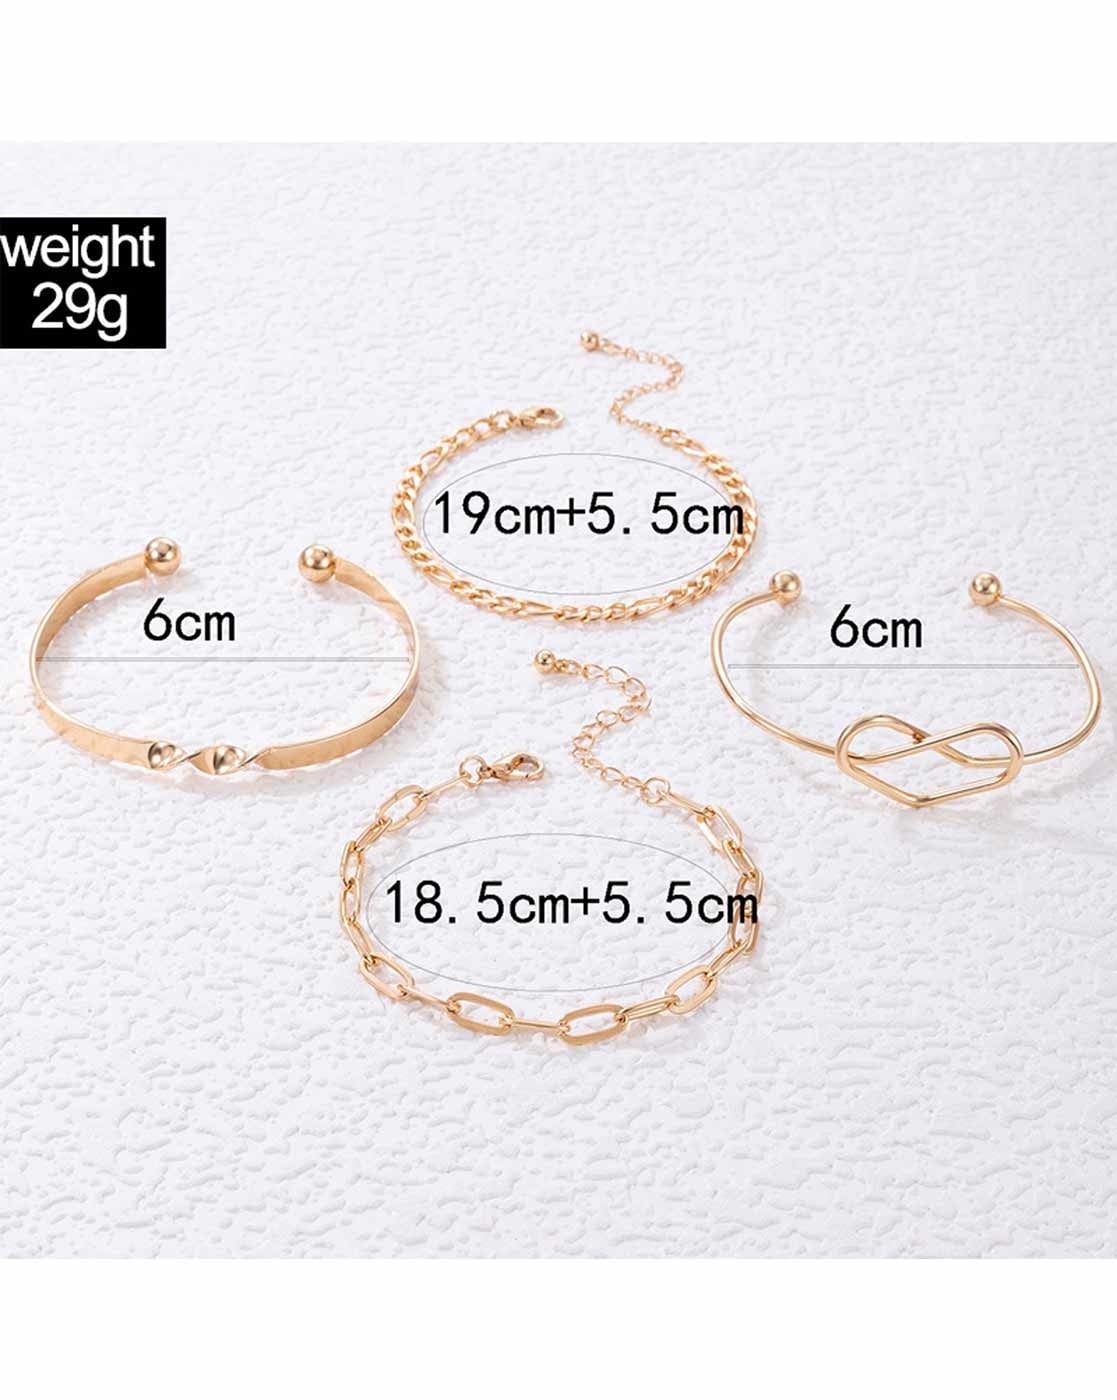 How to measure the right bracelet size | Abbott Lyon